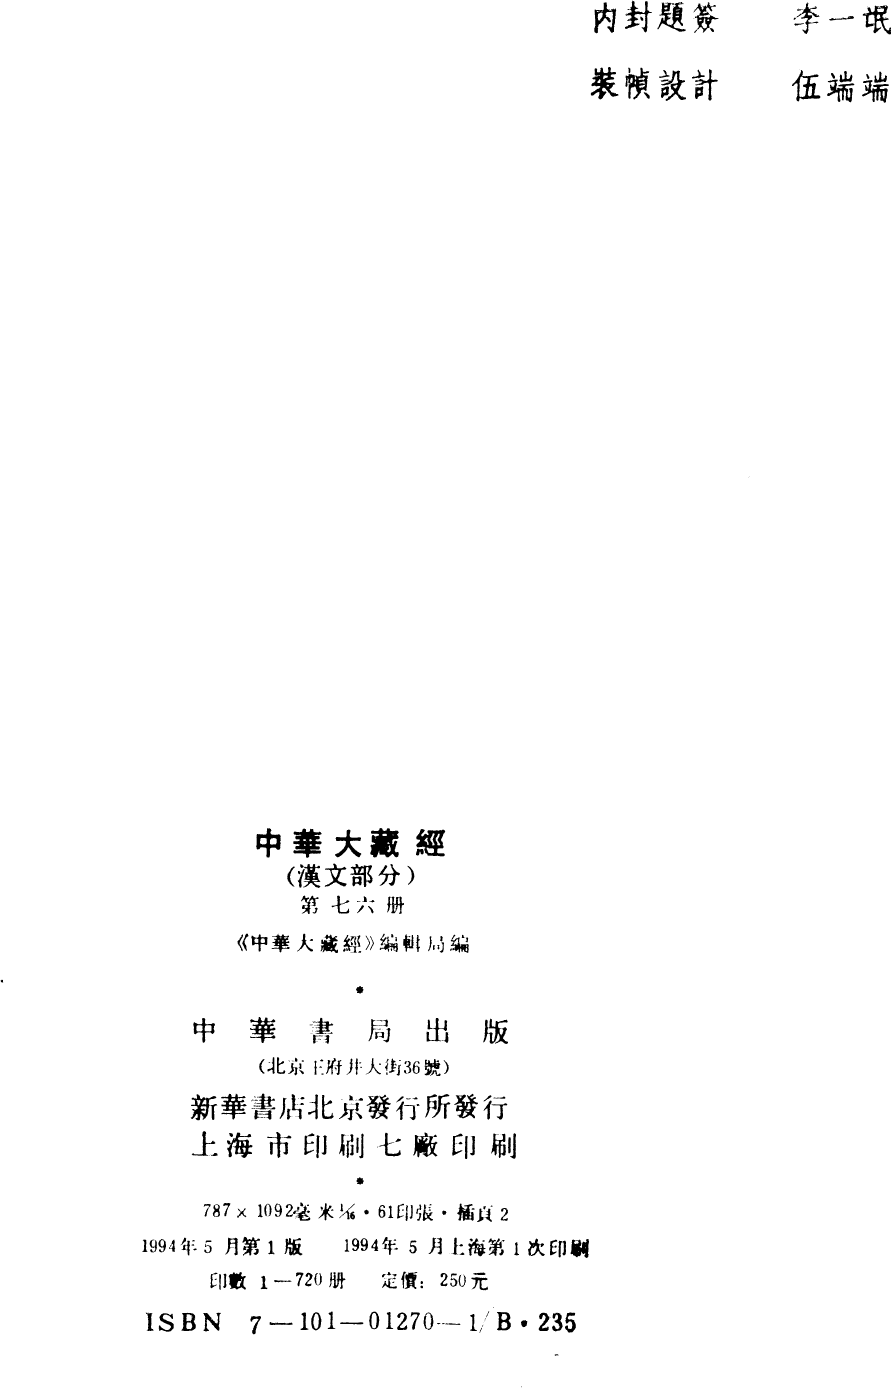 File:《中華大藏經》 第76冊 版權頁.png